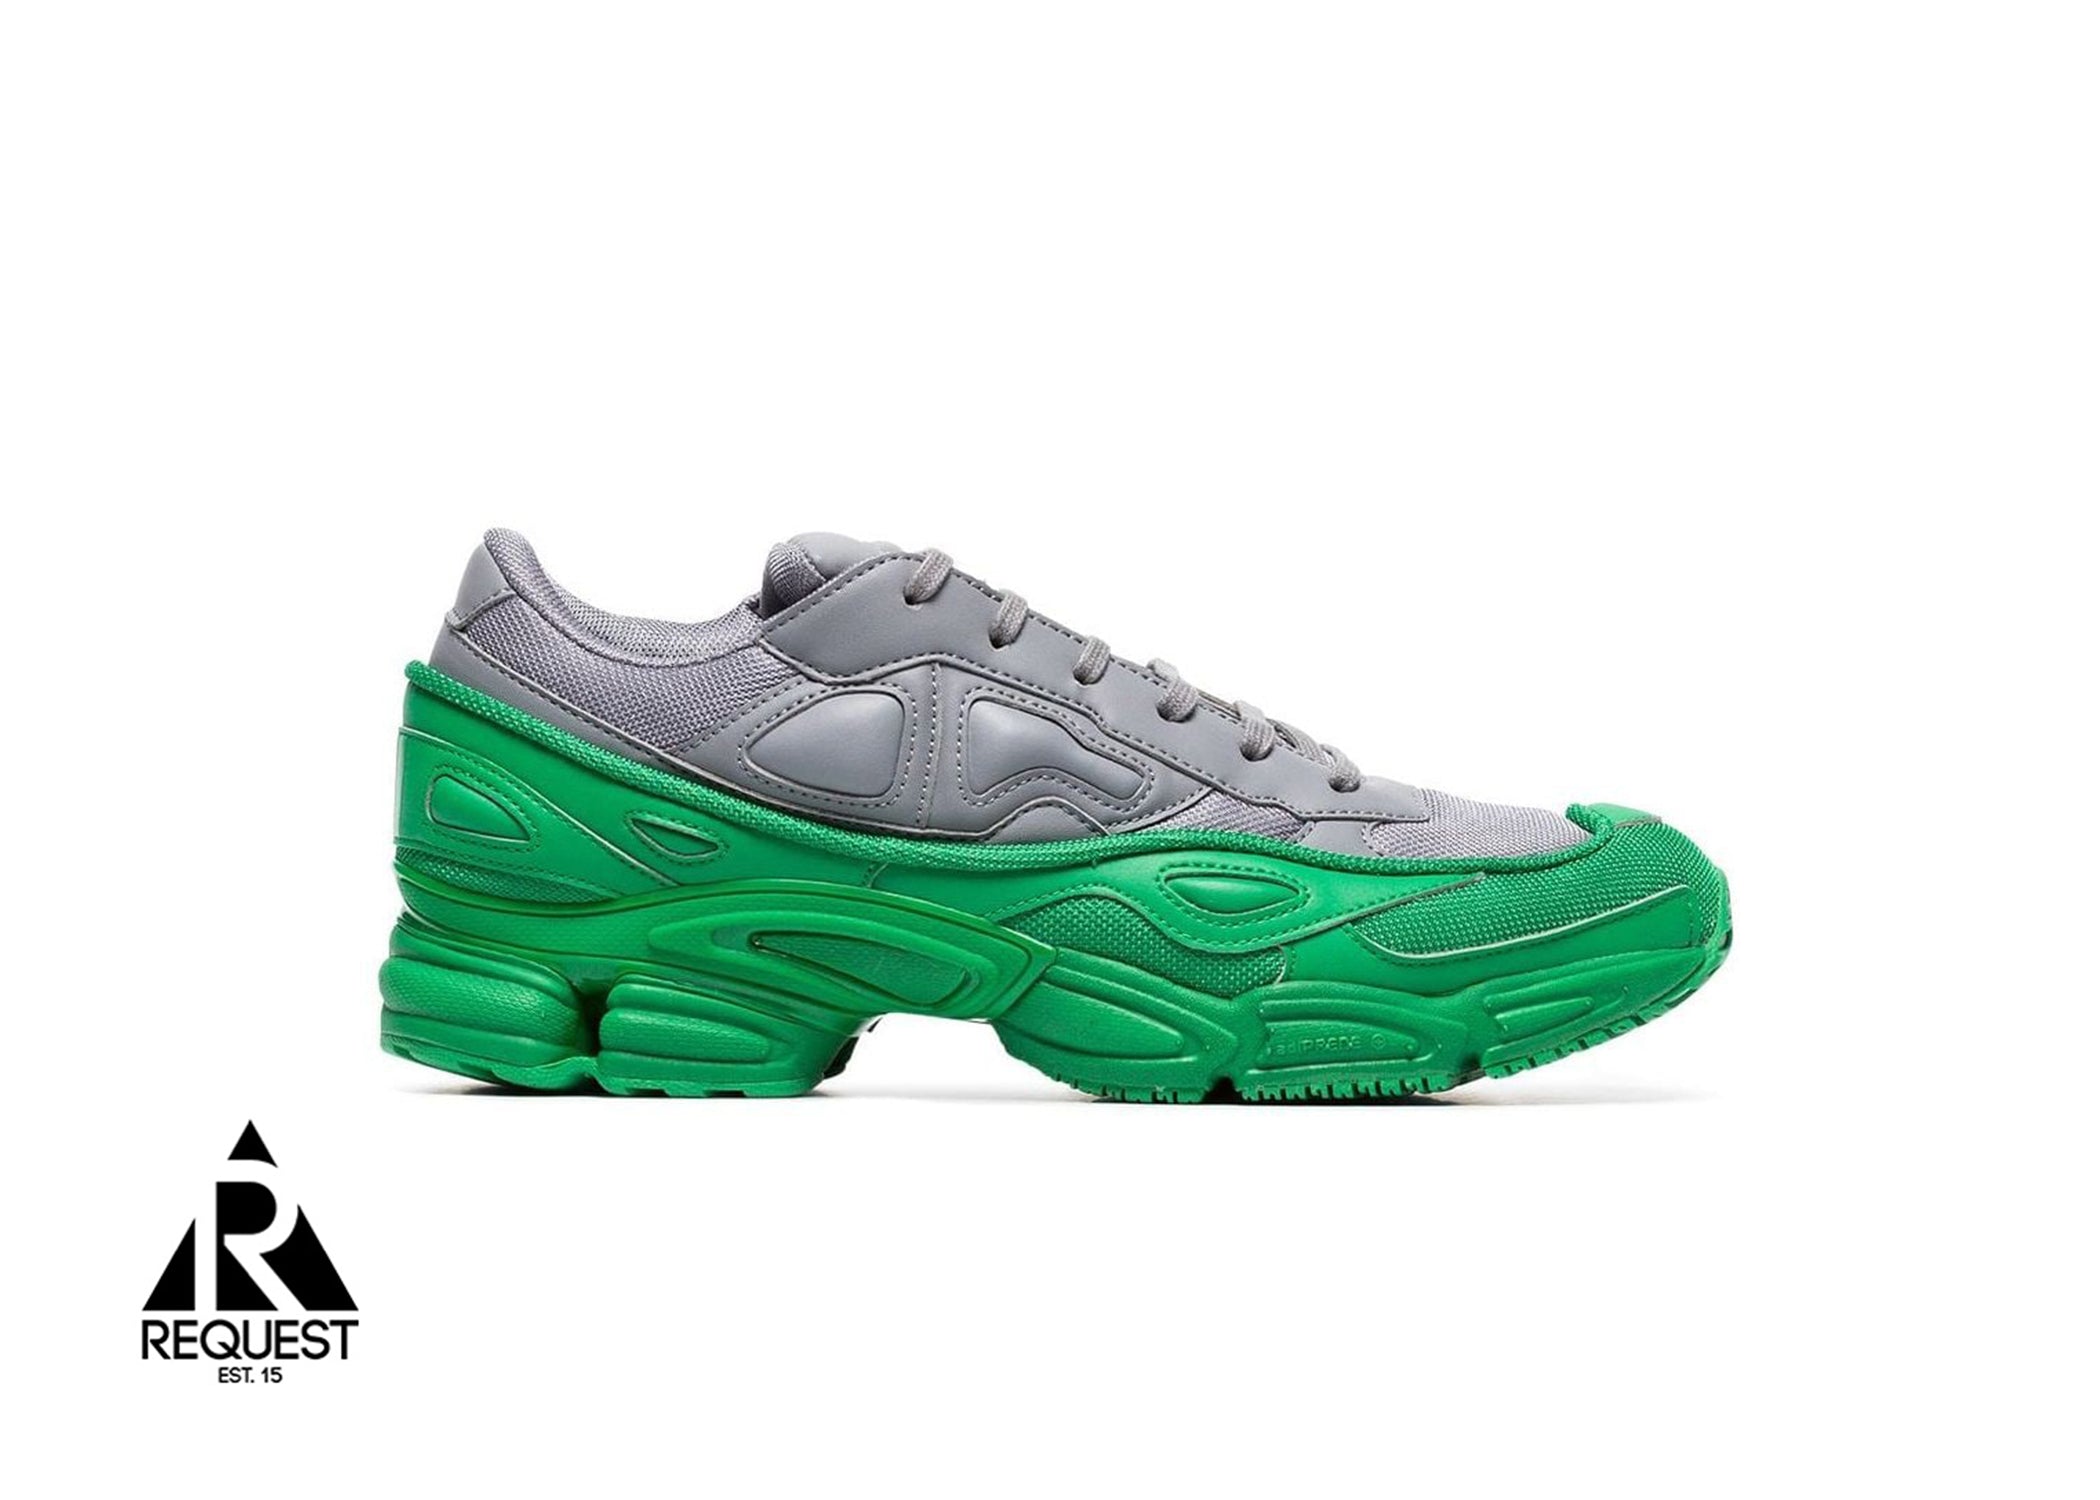 Adidas RAF Simons Ozweego “Green Grey”